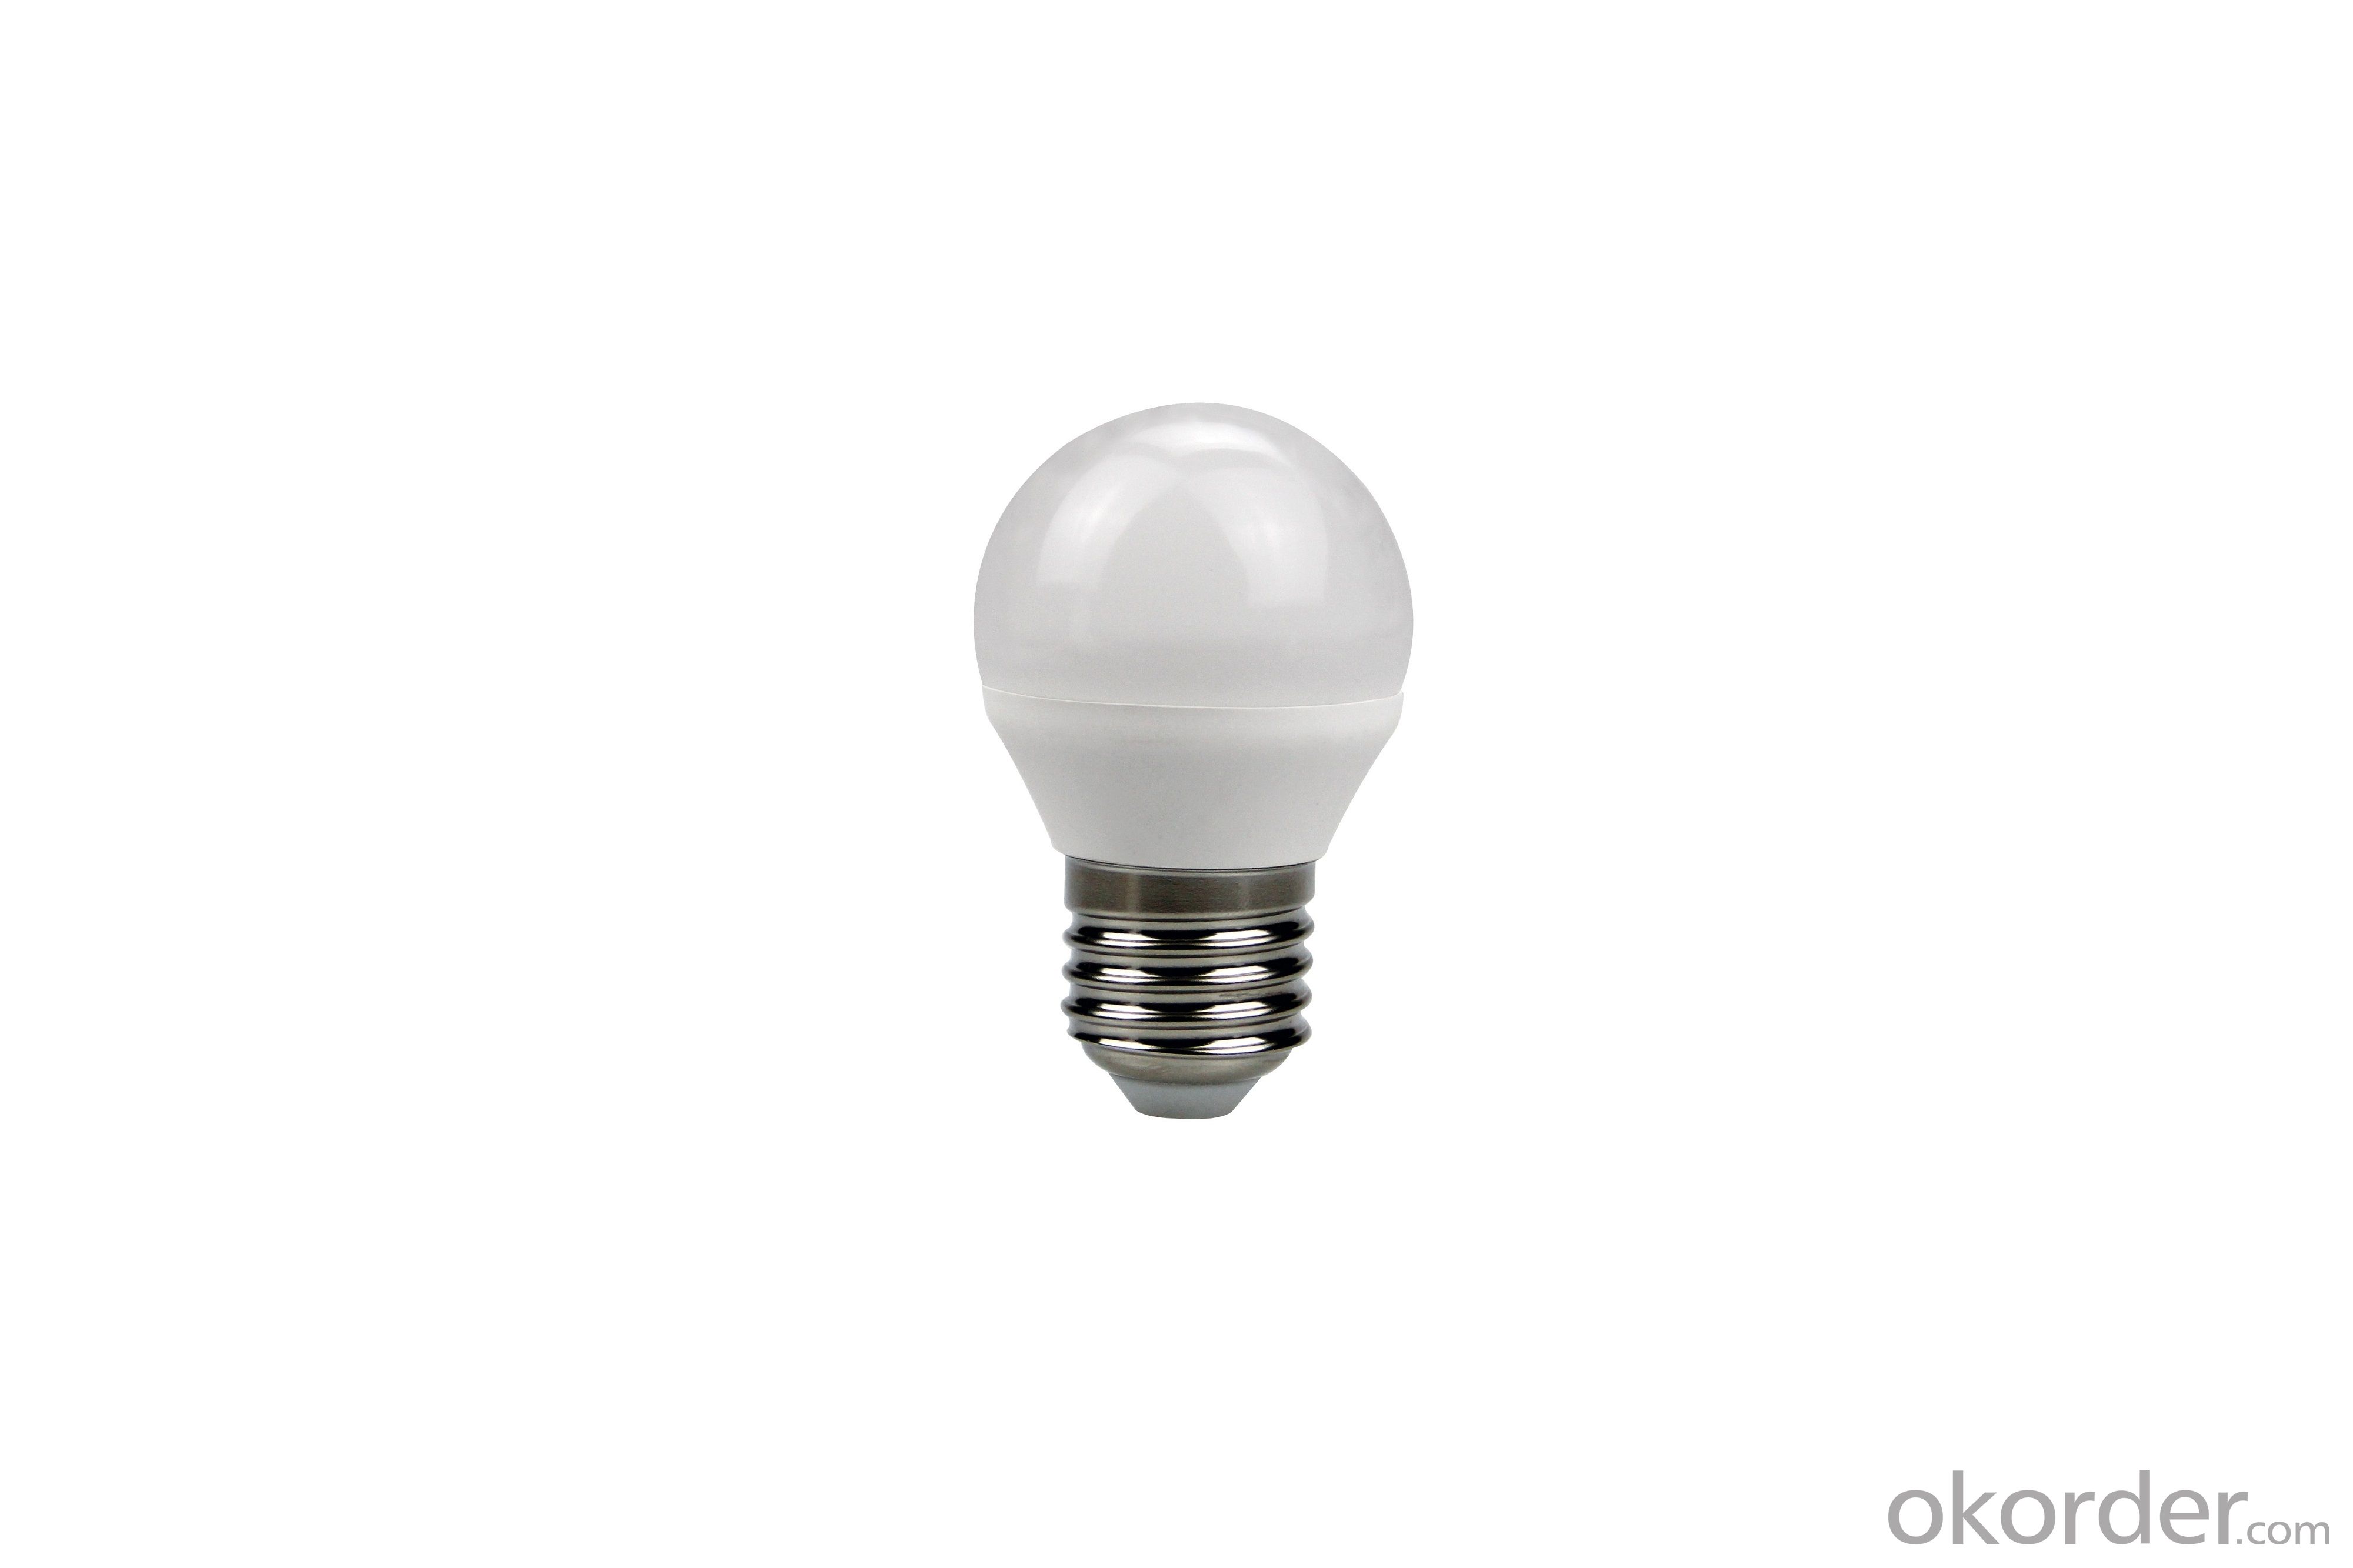 Dekbed regel havik LED Bulb Light E14 B45 9W 800 Lumen Non Dimmable real-time quotes,  last-sale prices -Okorder.com